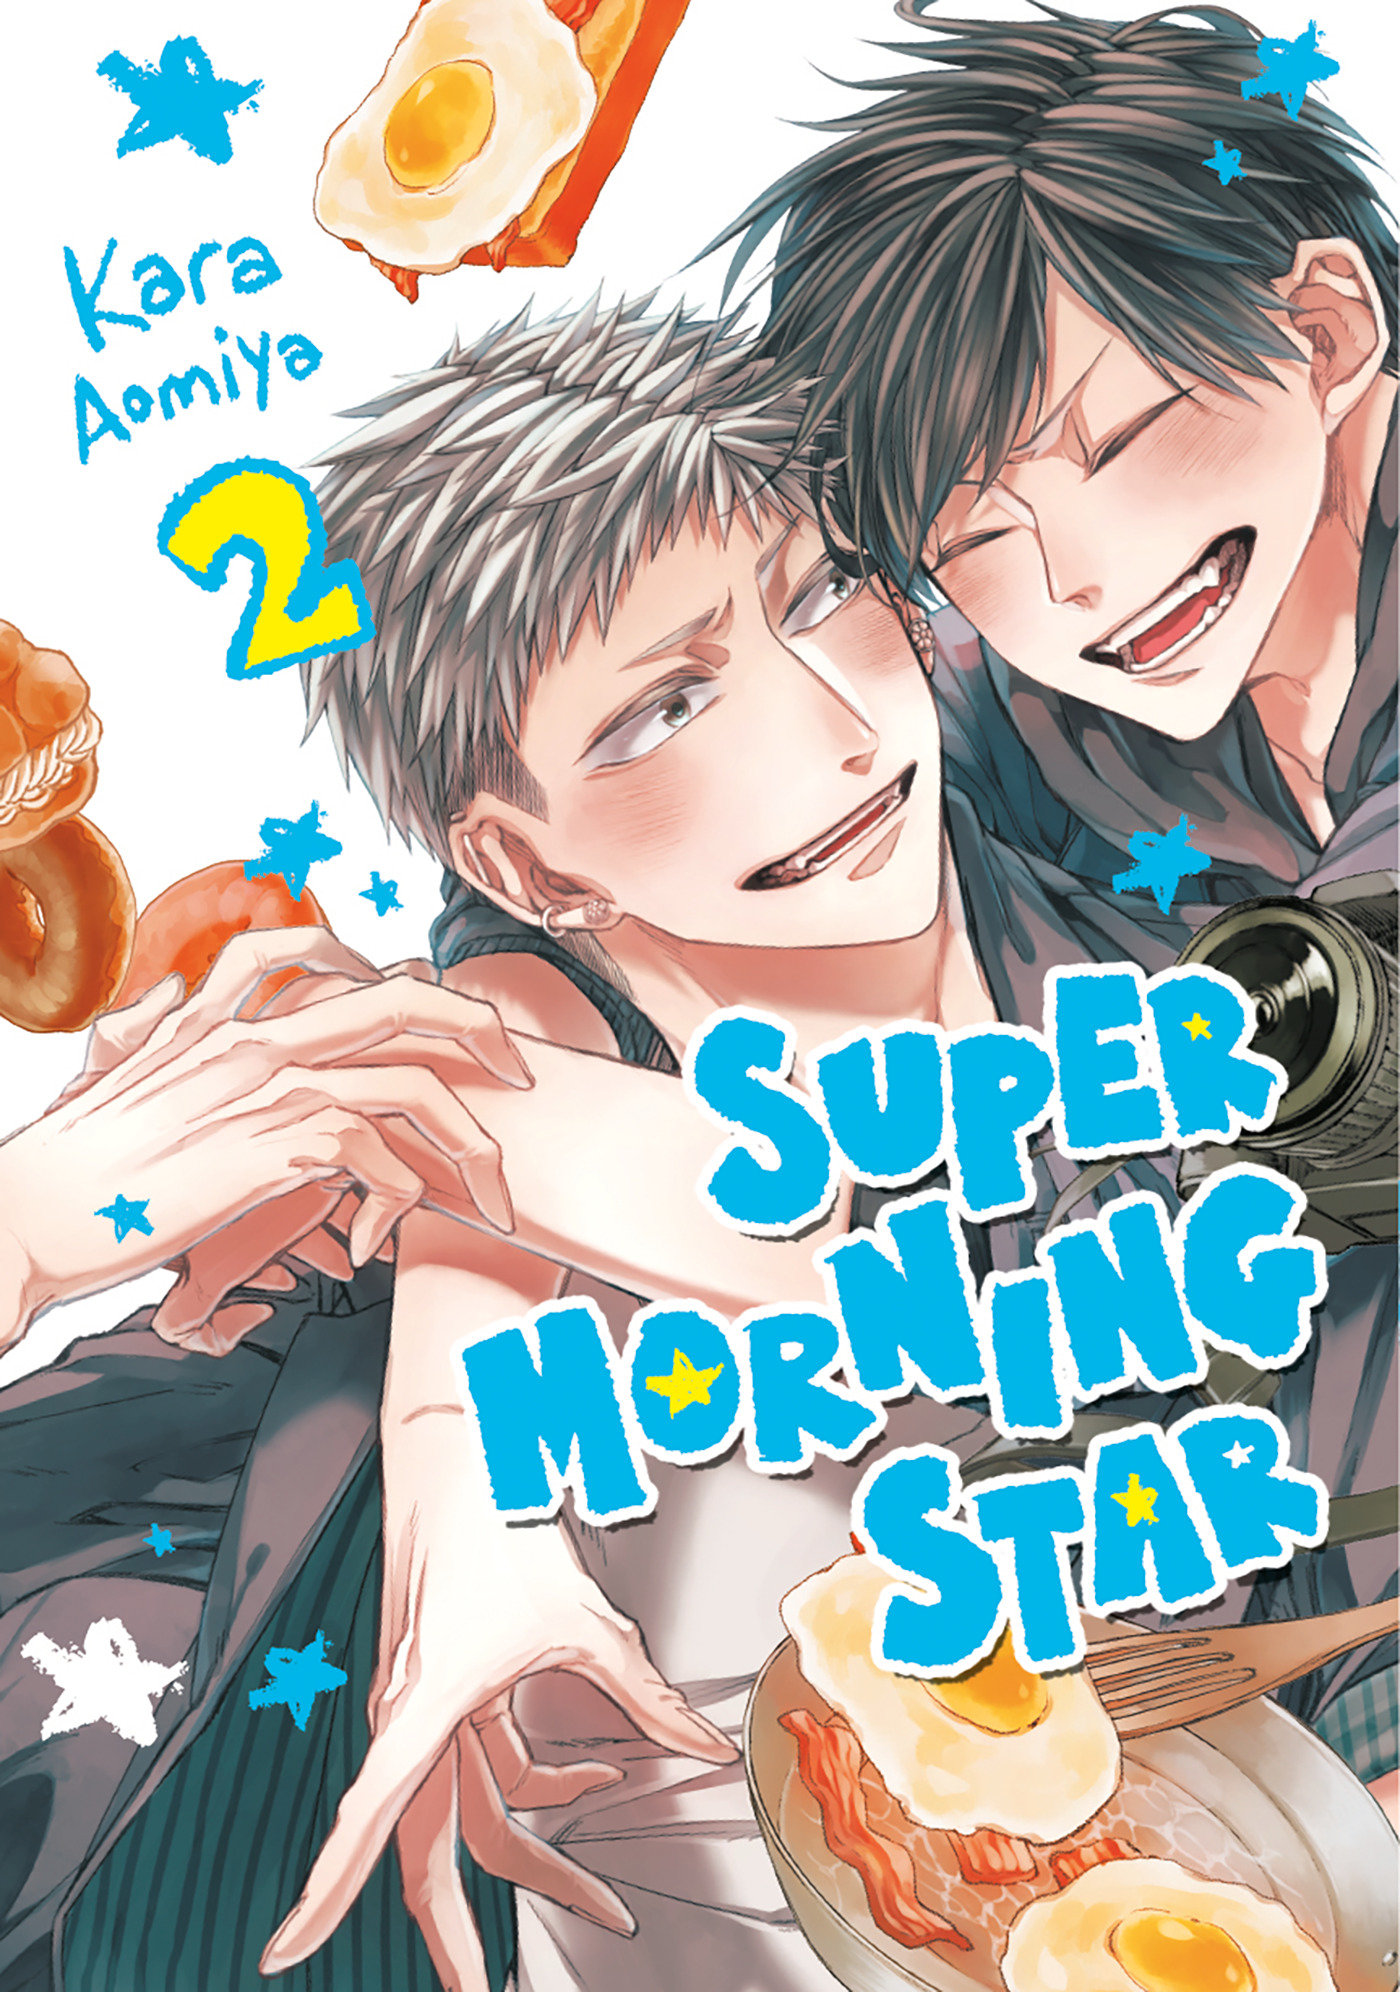 Super Morning Star Manga Volume 2 (Mature)